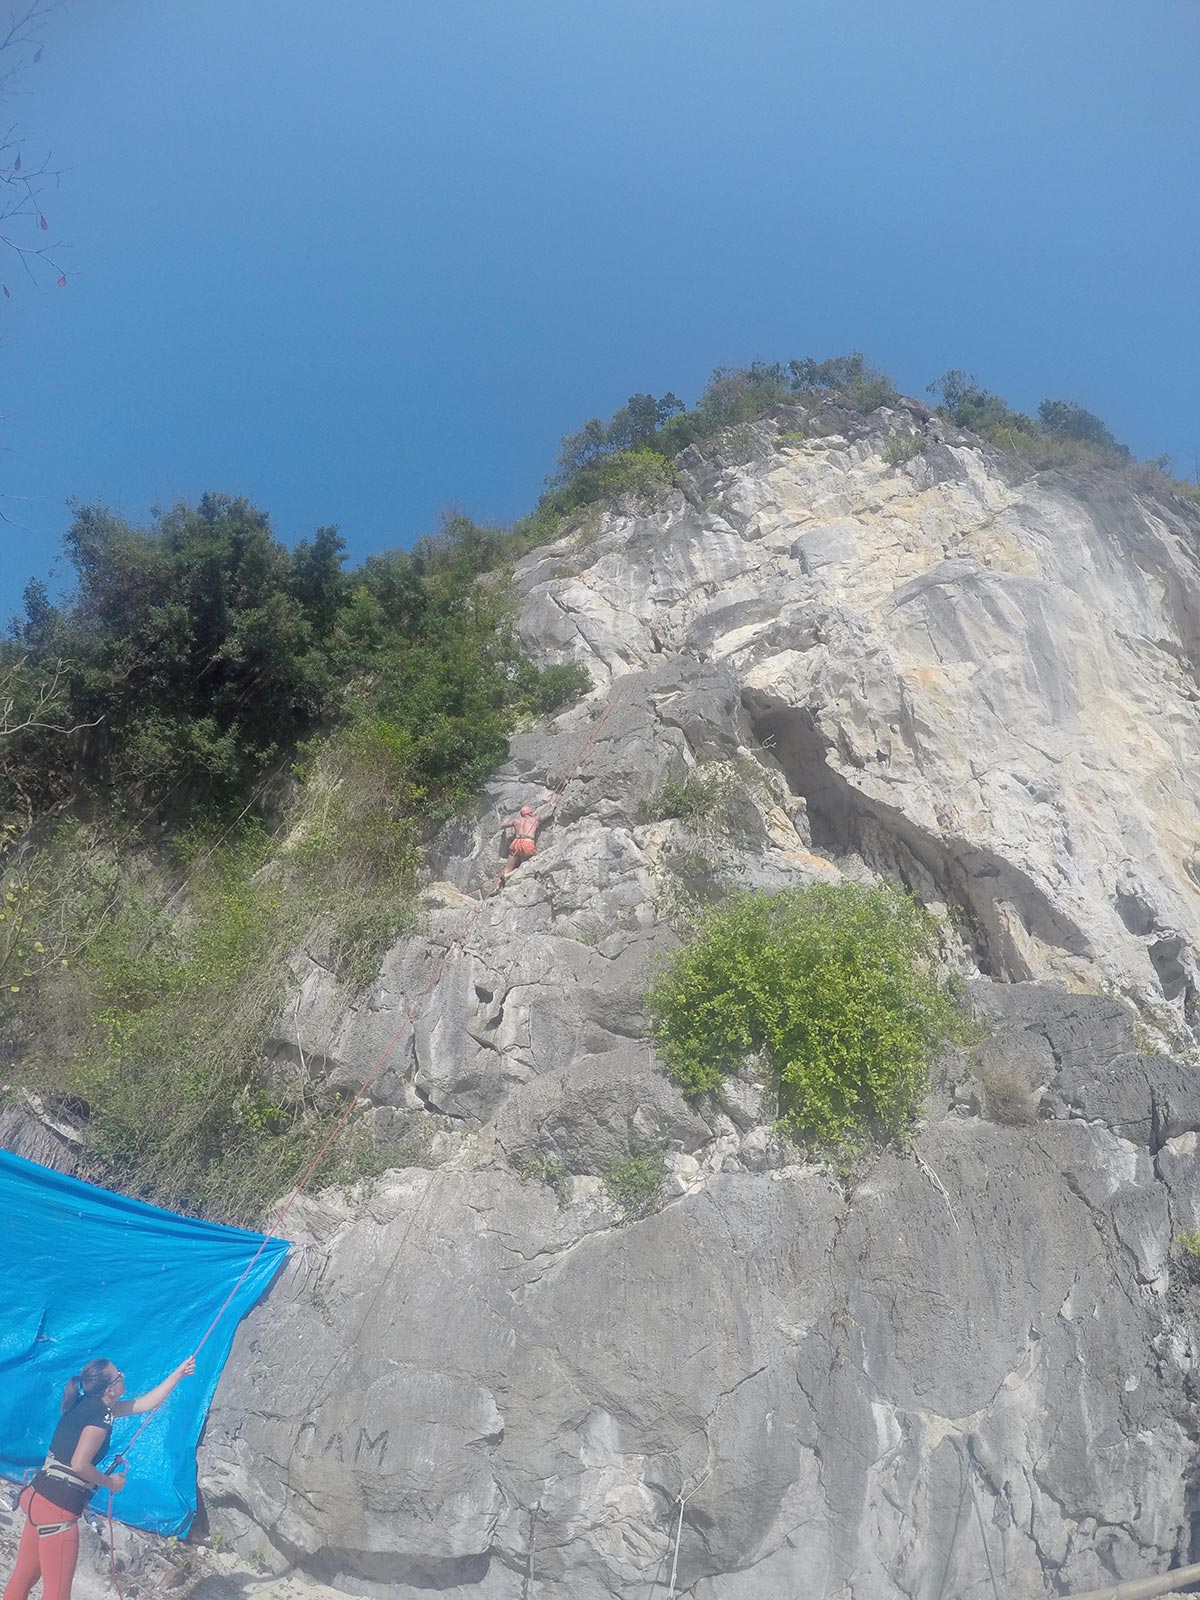 David Simpson climbing the limestone cliffs while a woman watches below in Ha Long Bay, Vietnam. Rock climbing in Ha Long Bay